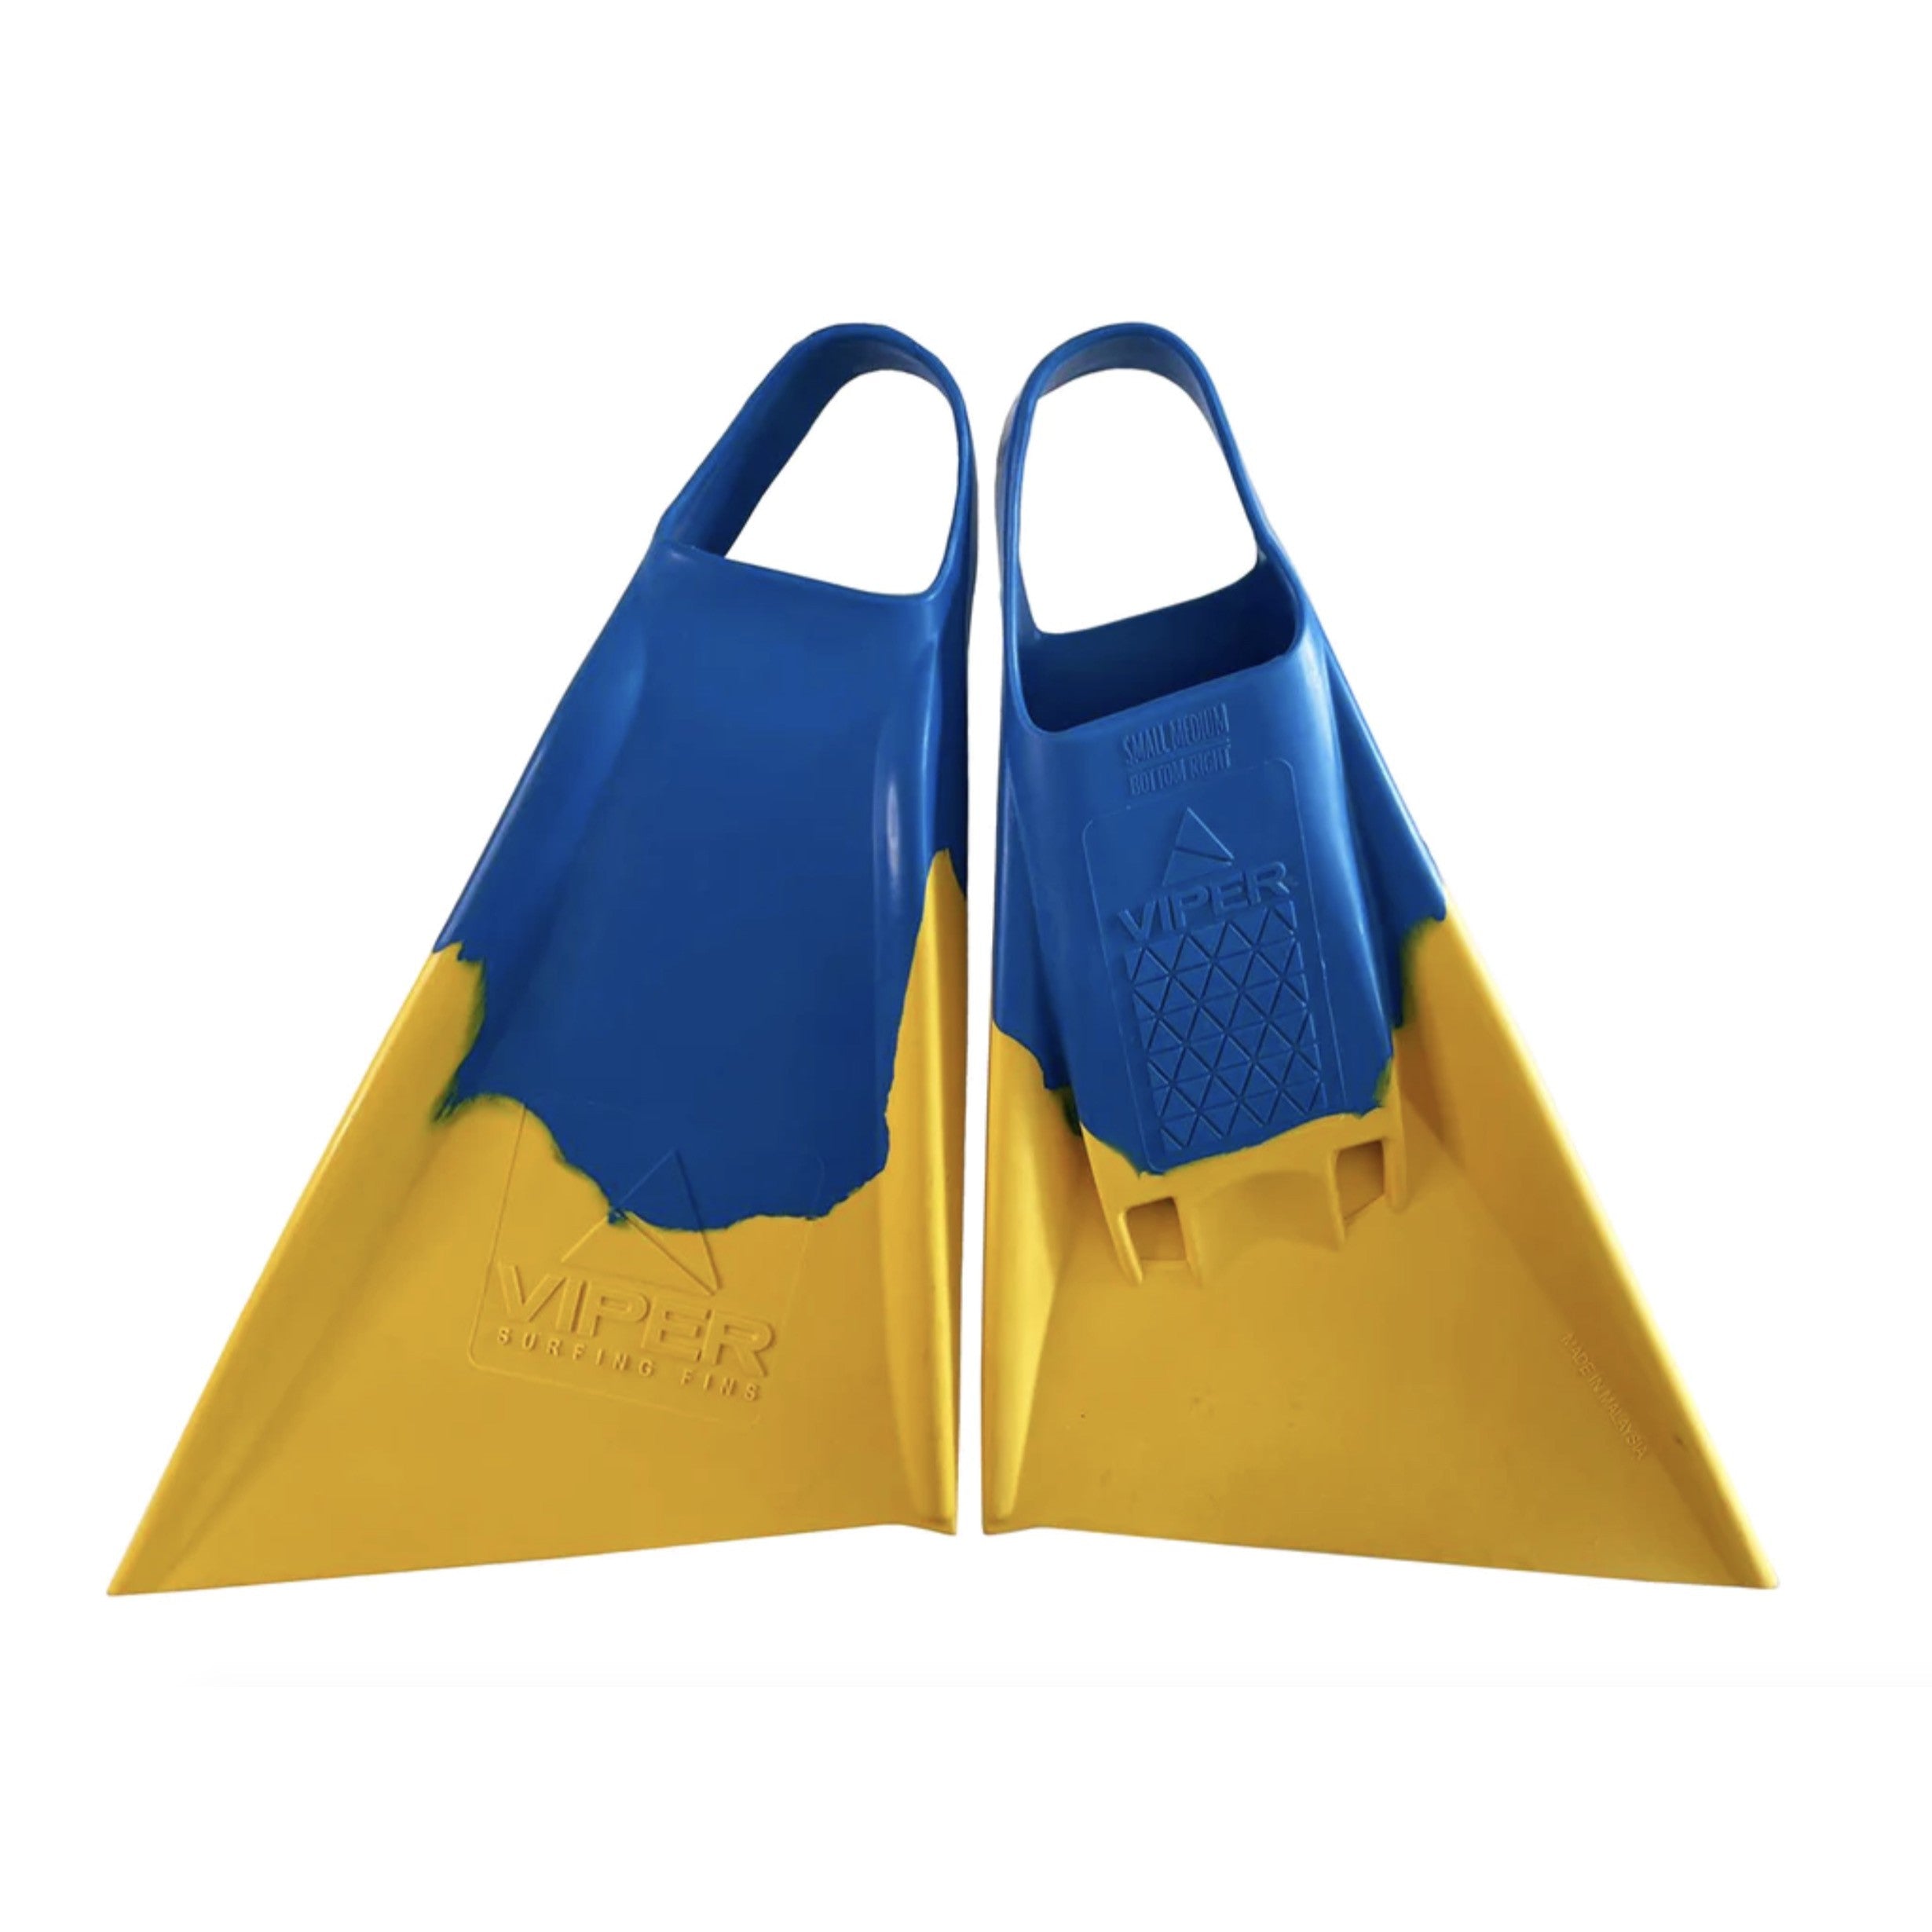 MS VIPER Delta Icons - Bodyboard Fins - Blue / Yellow